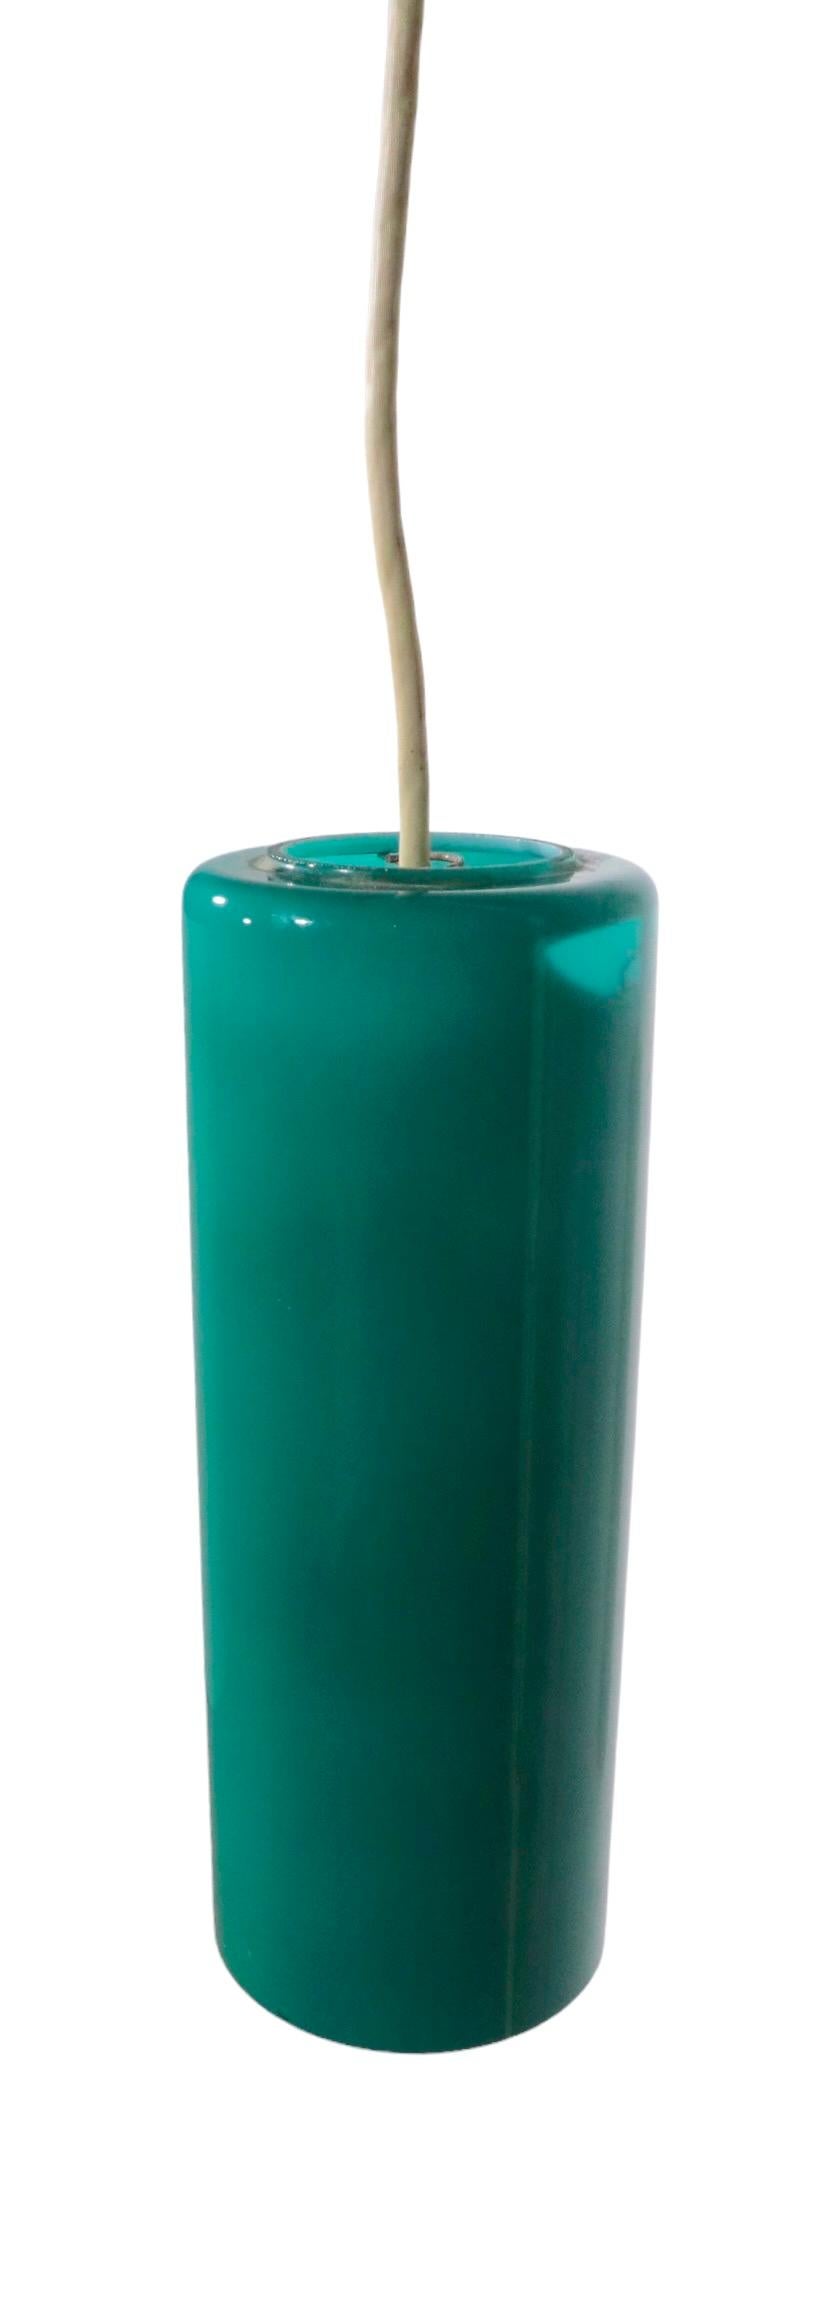 Prescolit-Zylinder-Kronleuchter aus grünem Glas, ca. 1950 - 1970er Jahre im Angebot 1